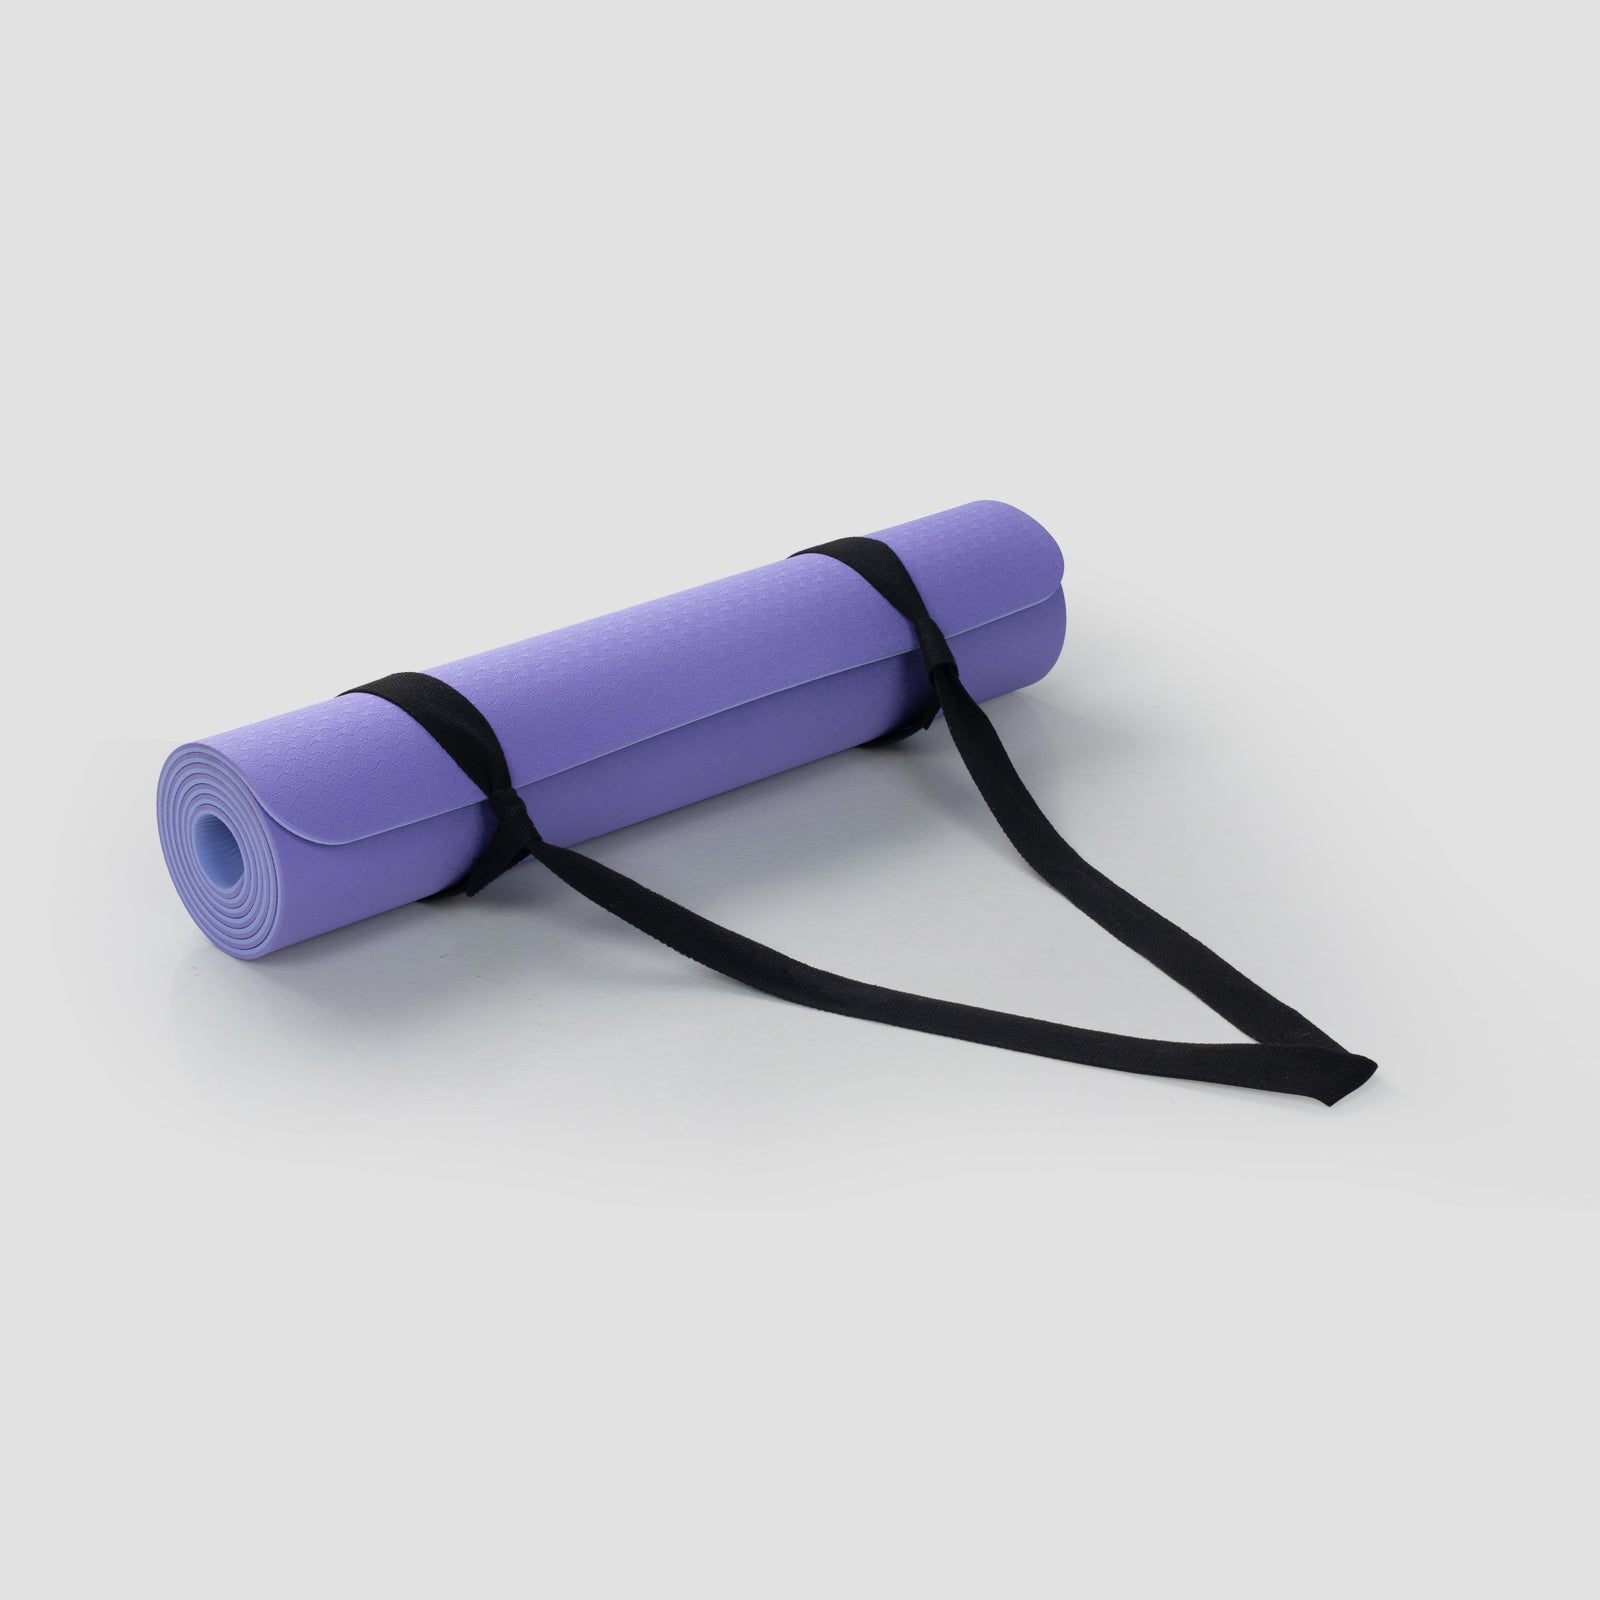 purple yoga mats